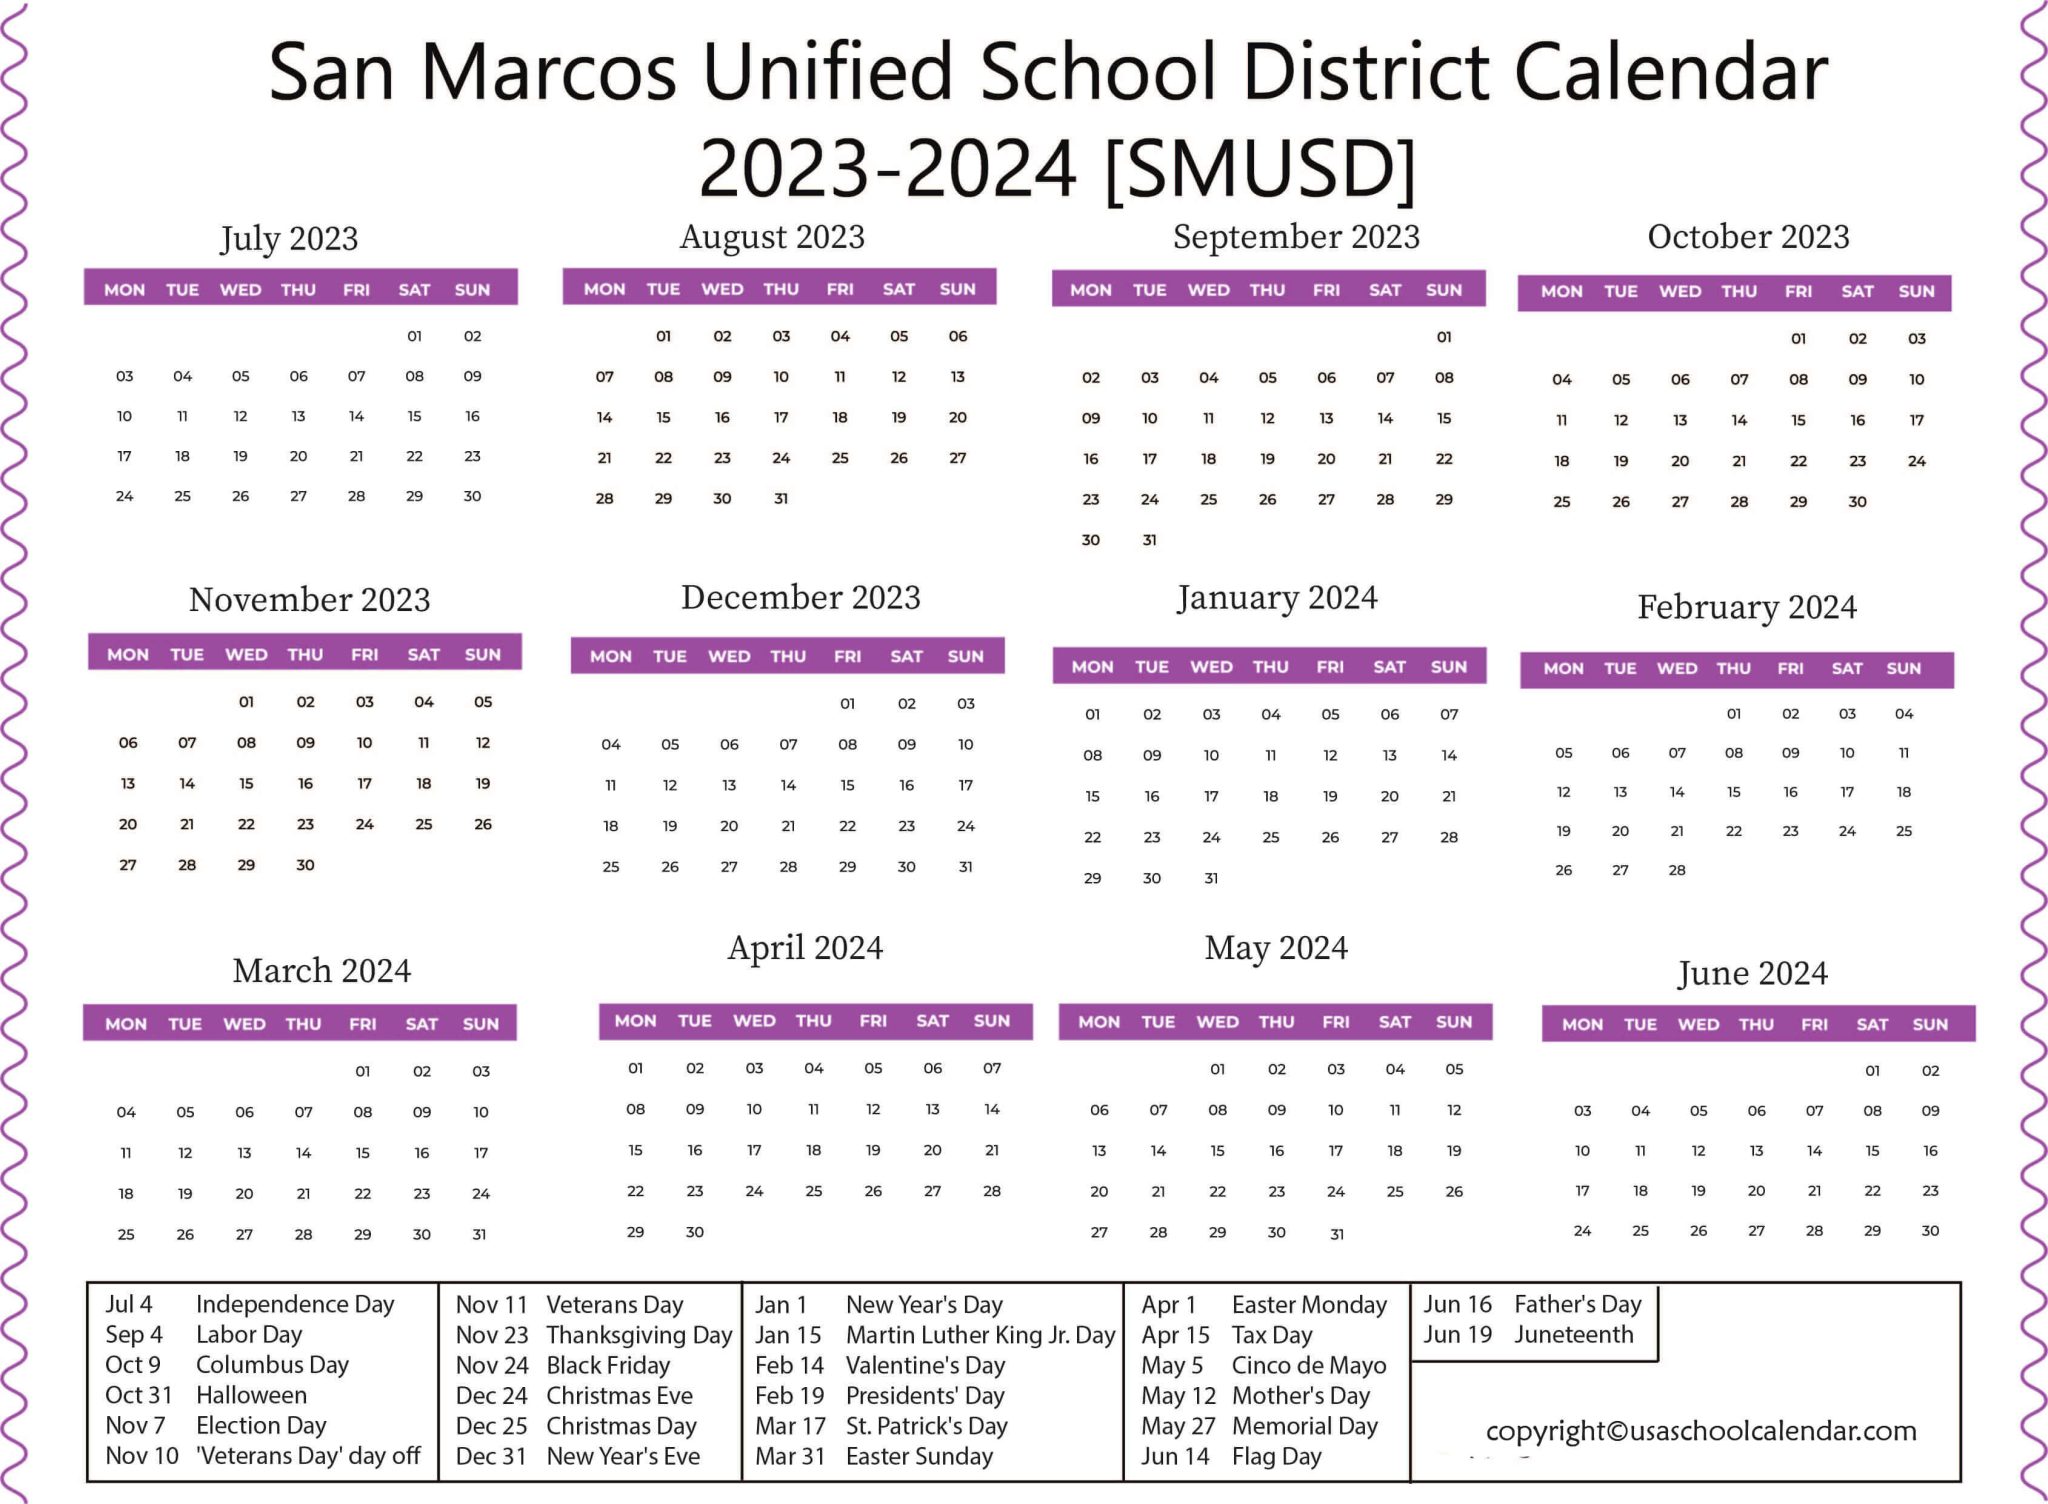 San Marcos Unified School District Calendar 2048x1504 